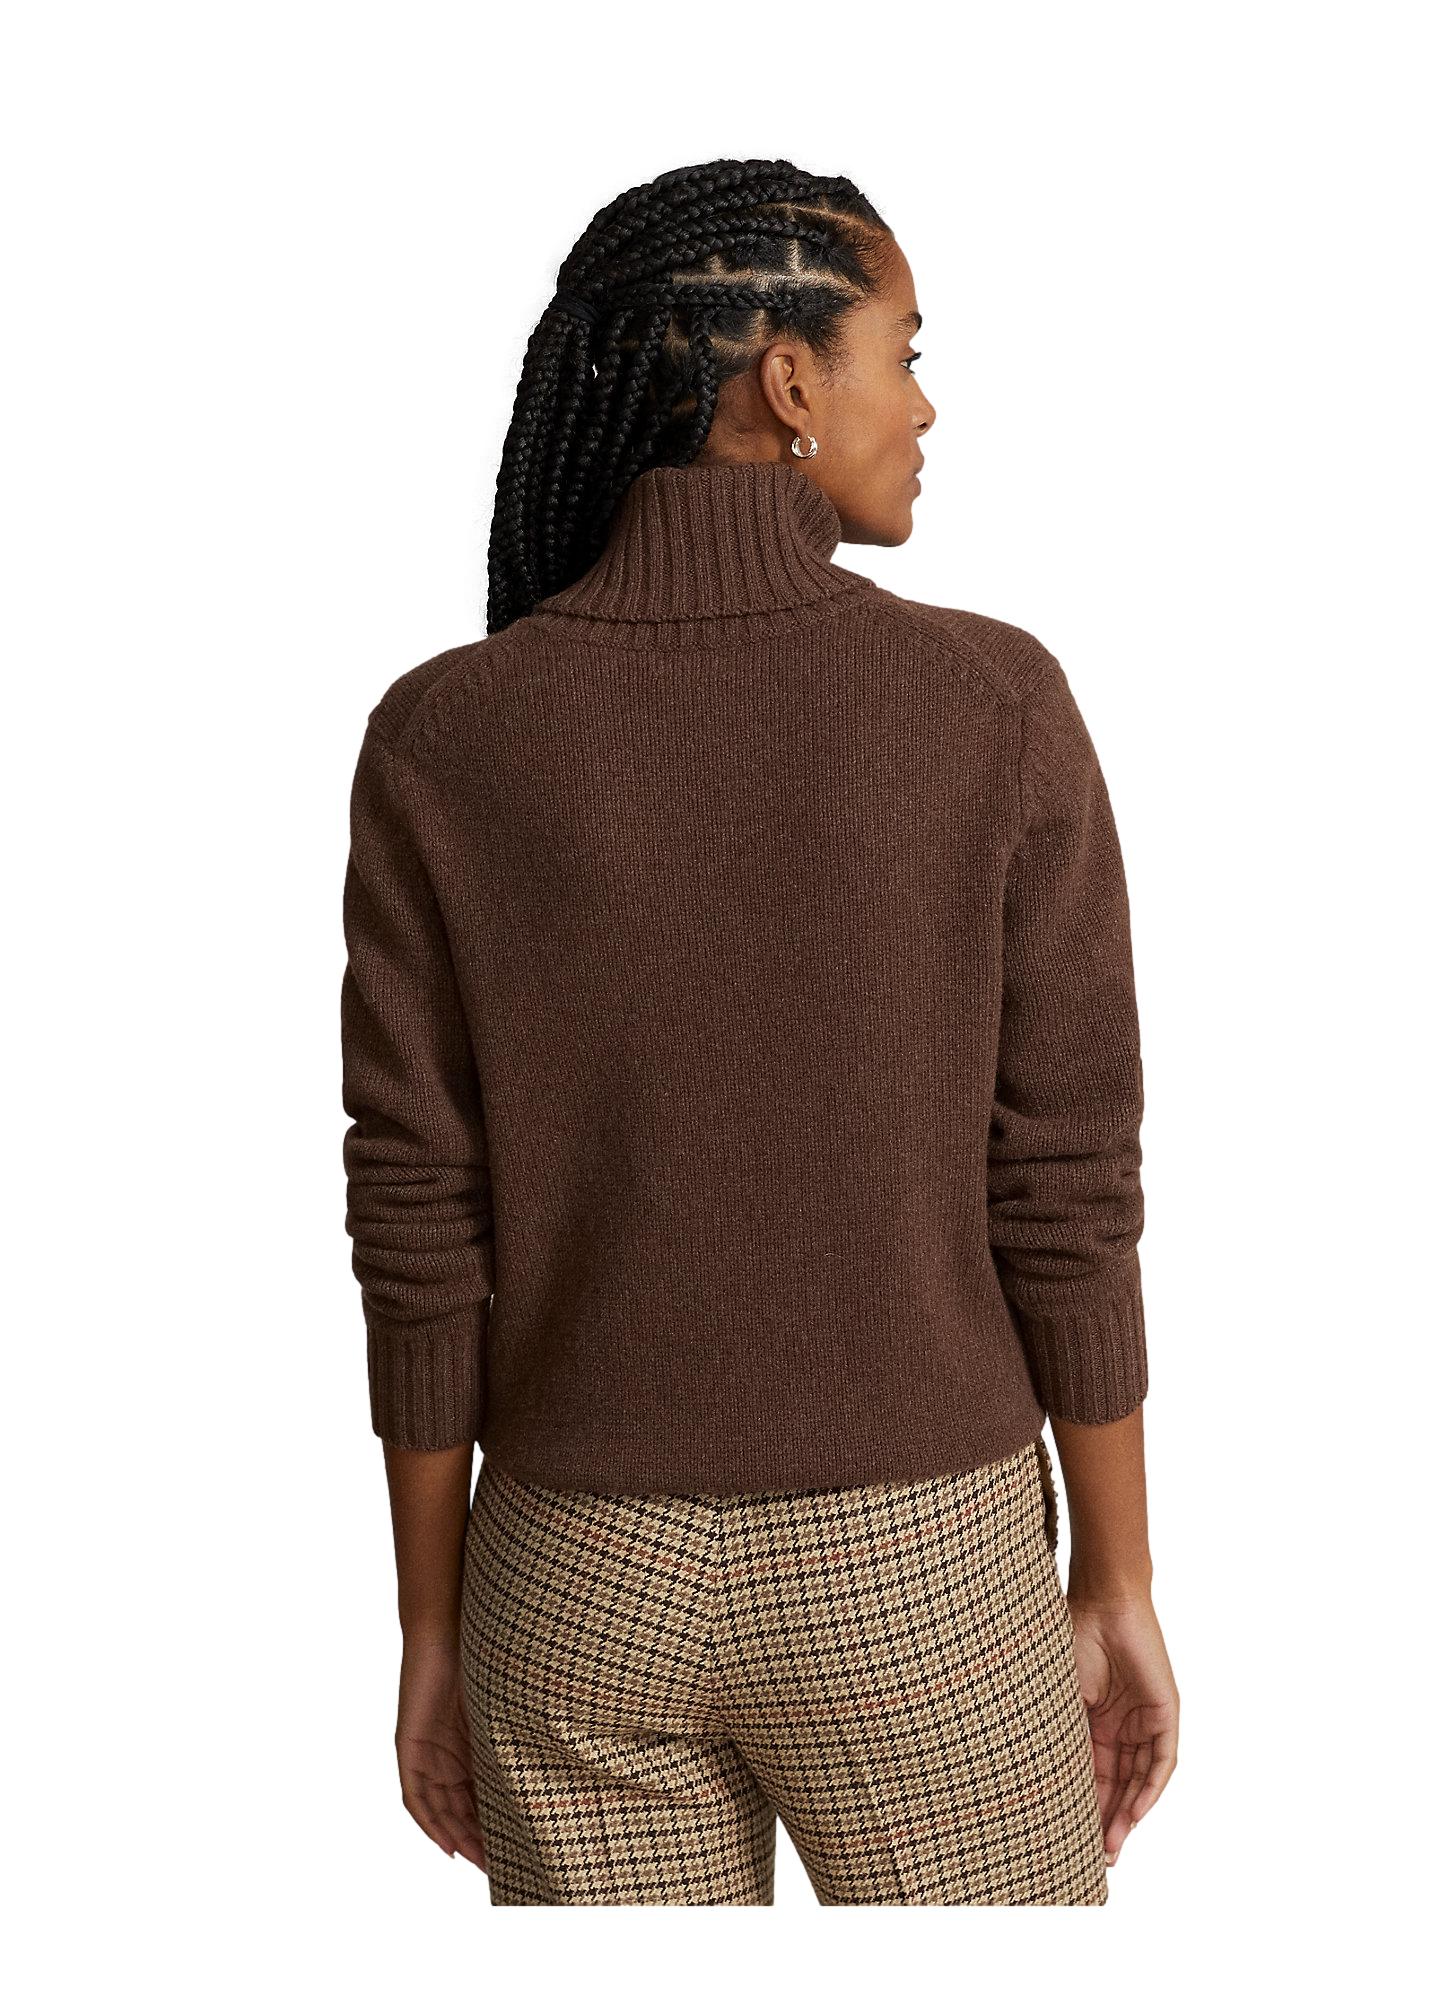 Polo Ralph Lauren Wool Turtleneck Sweater Genser Mørkebrun - chrismoa.no